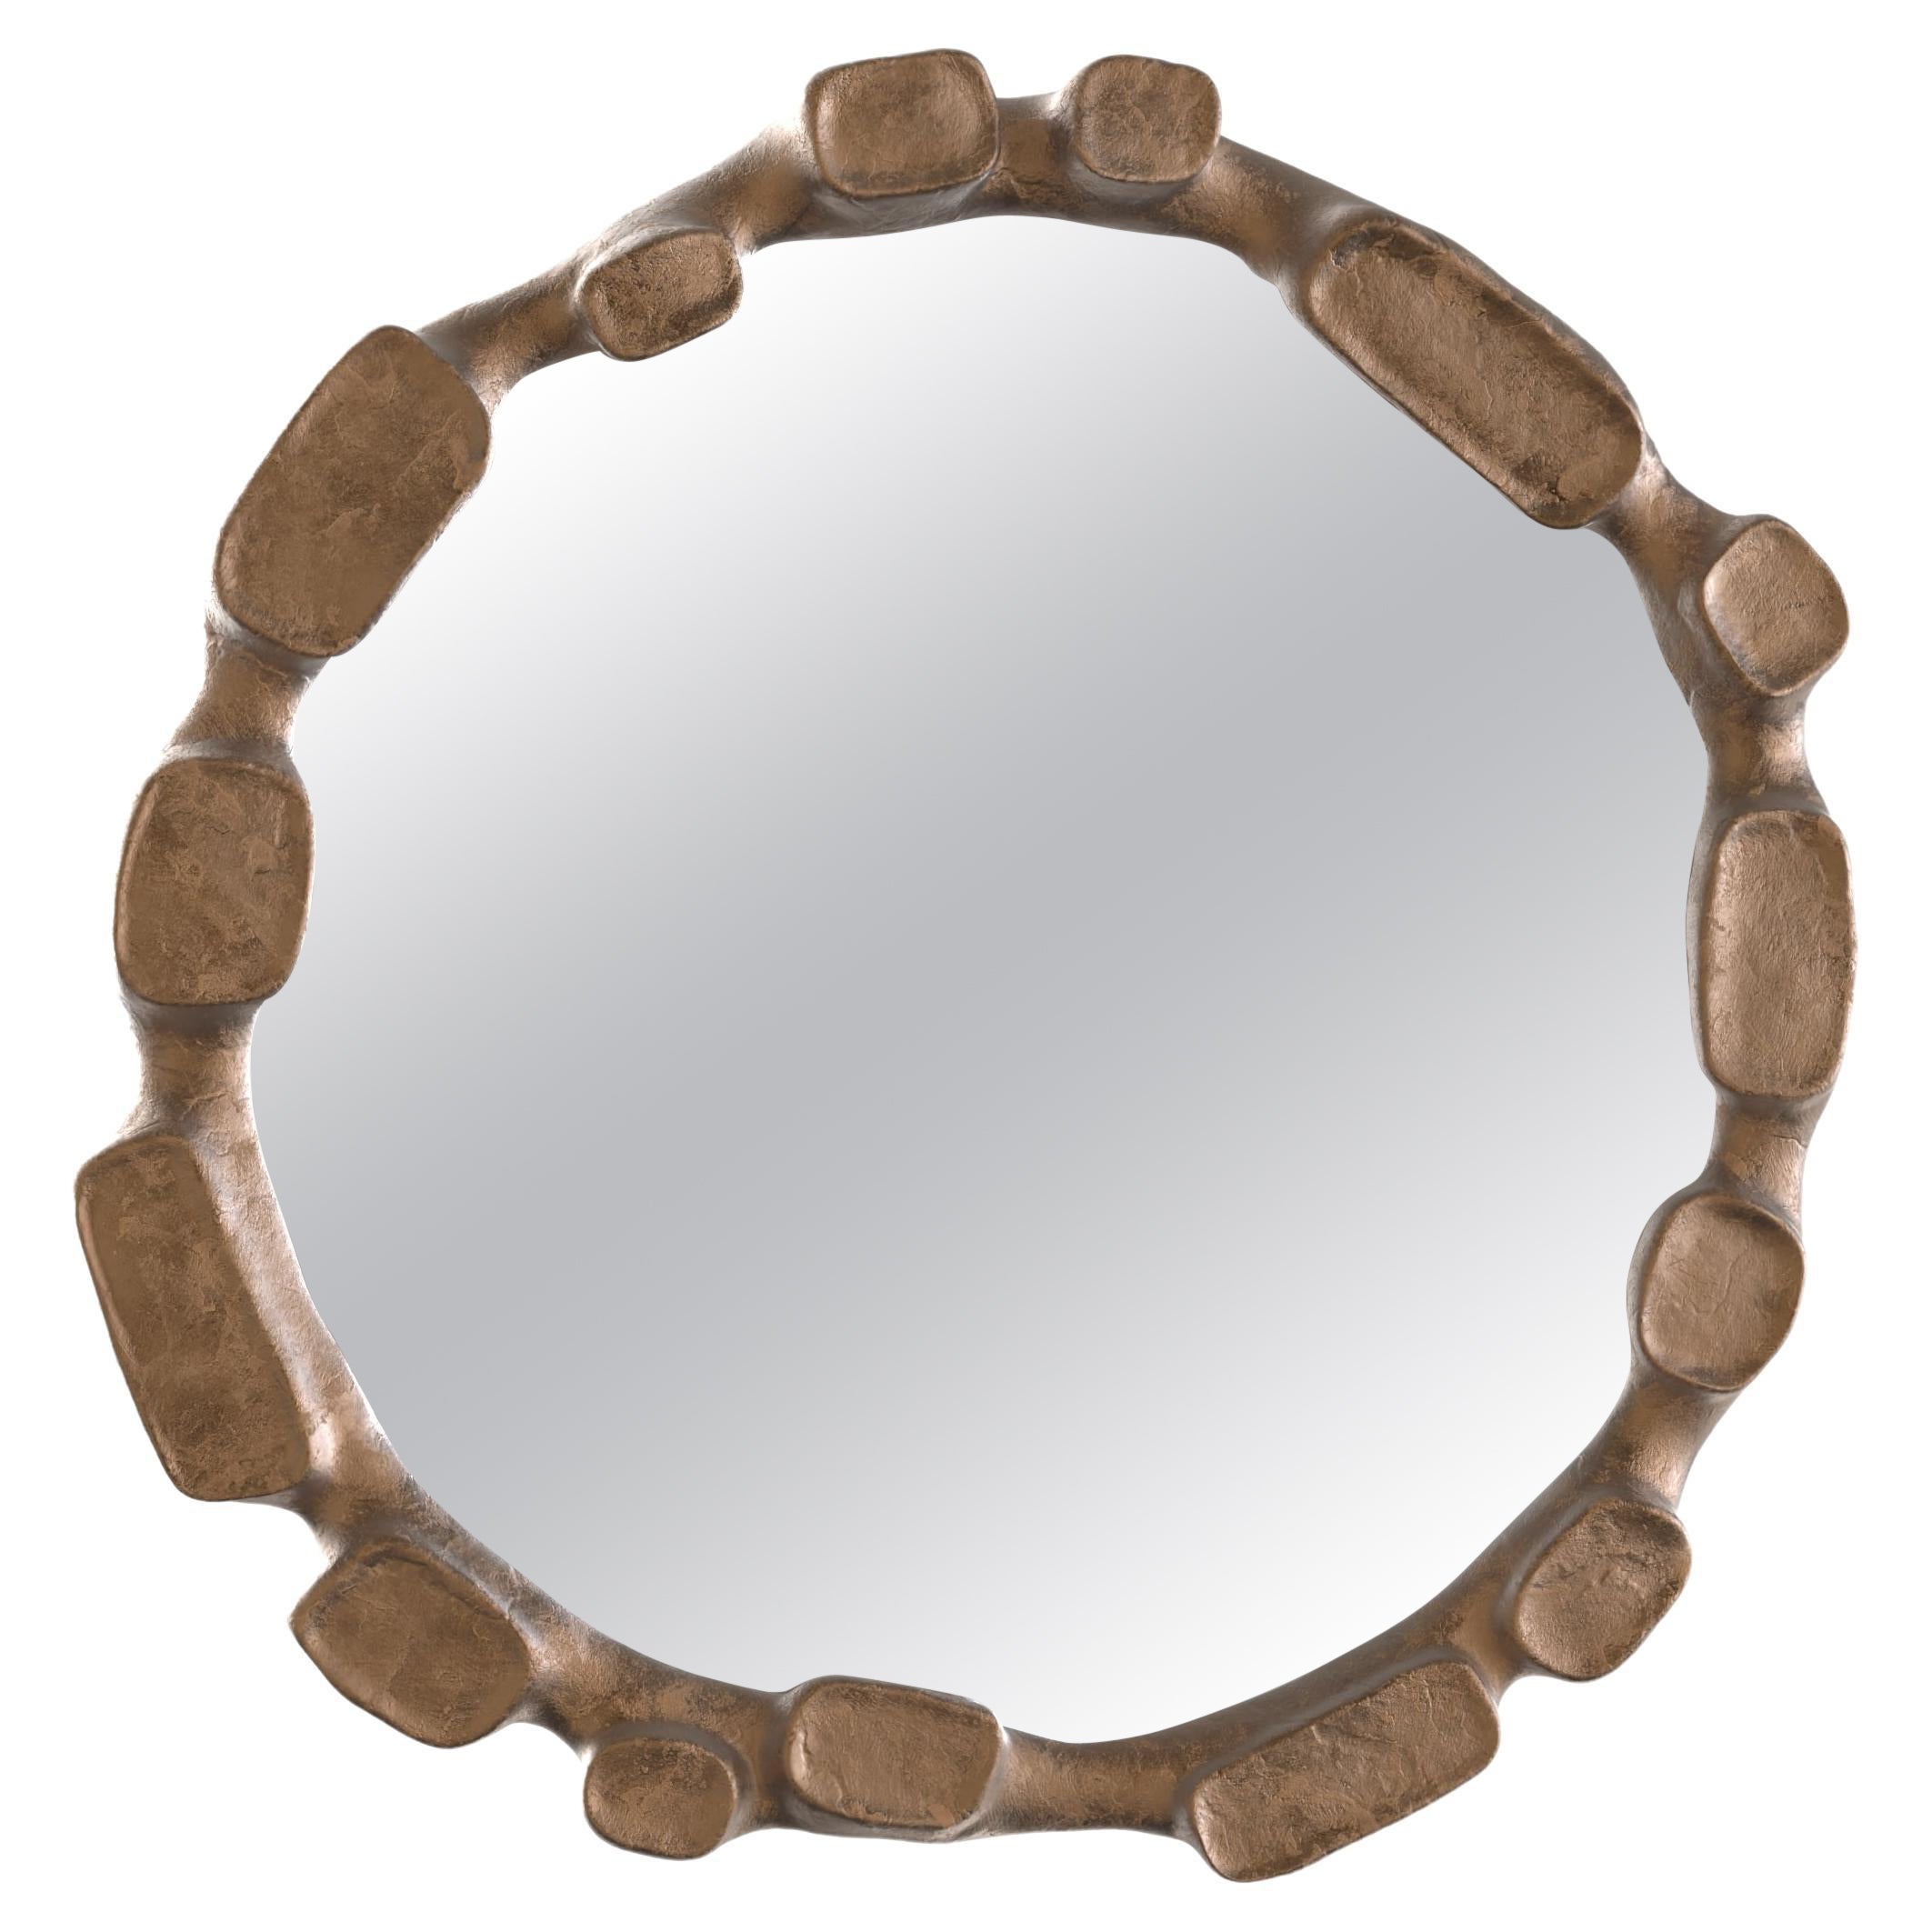 Contemporary Limited Edition Bronze Mirror, Mare V1 by Simone Fanciullacci For Sale